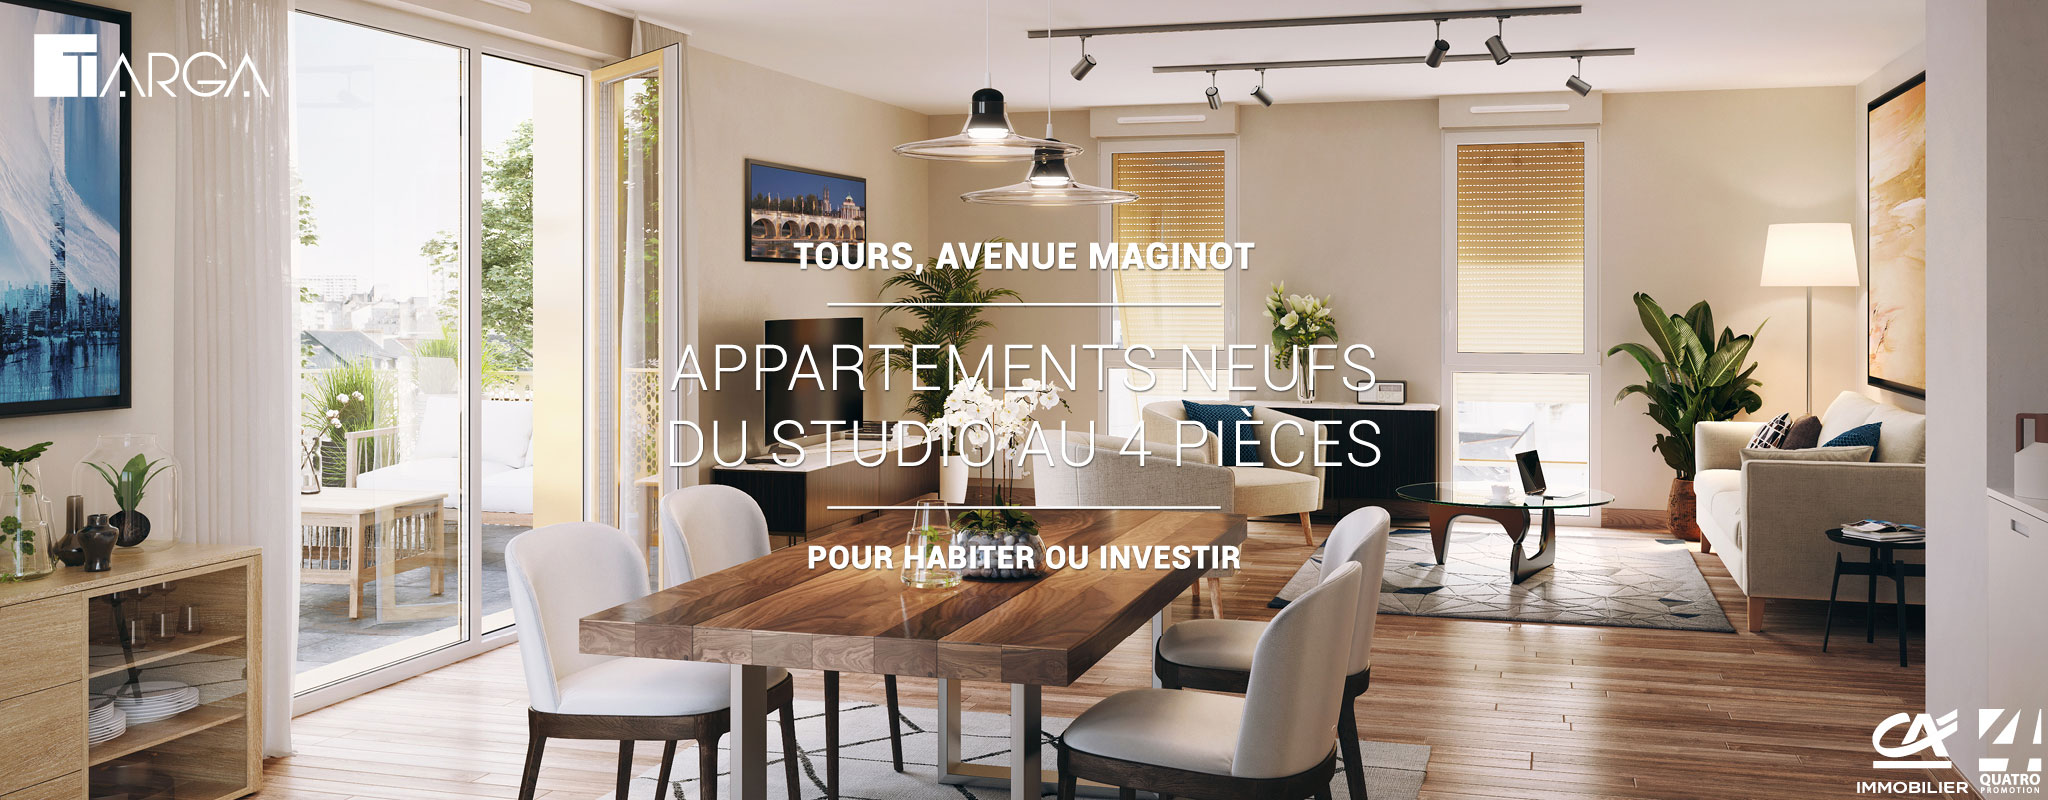 Résidence TARGA, appartements neufs Tours